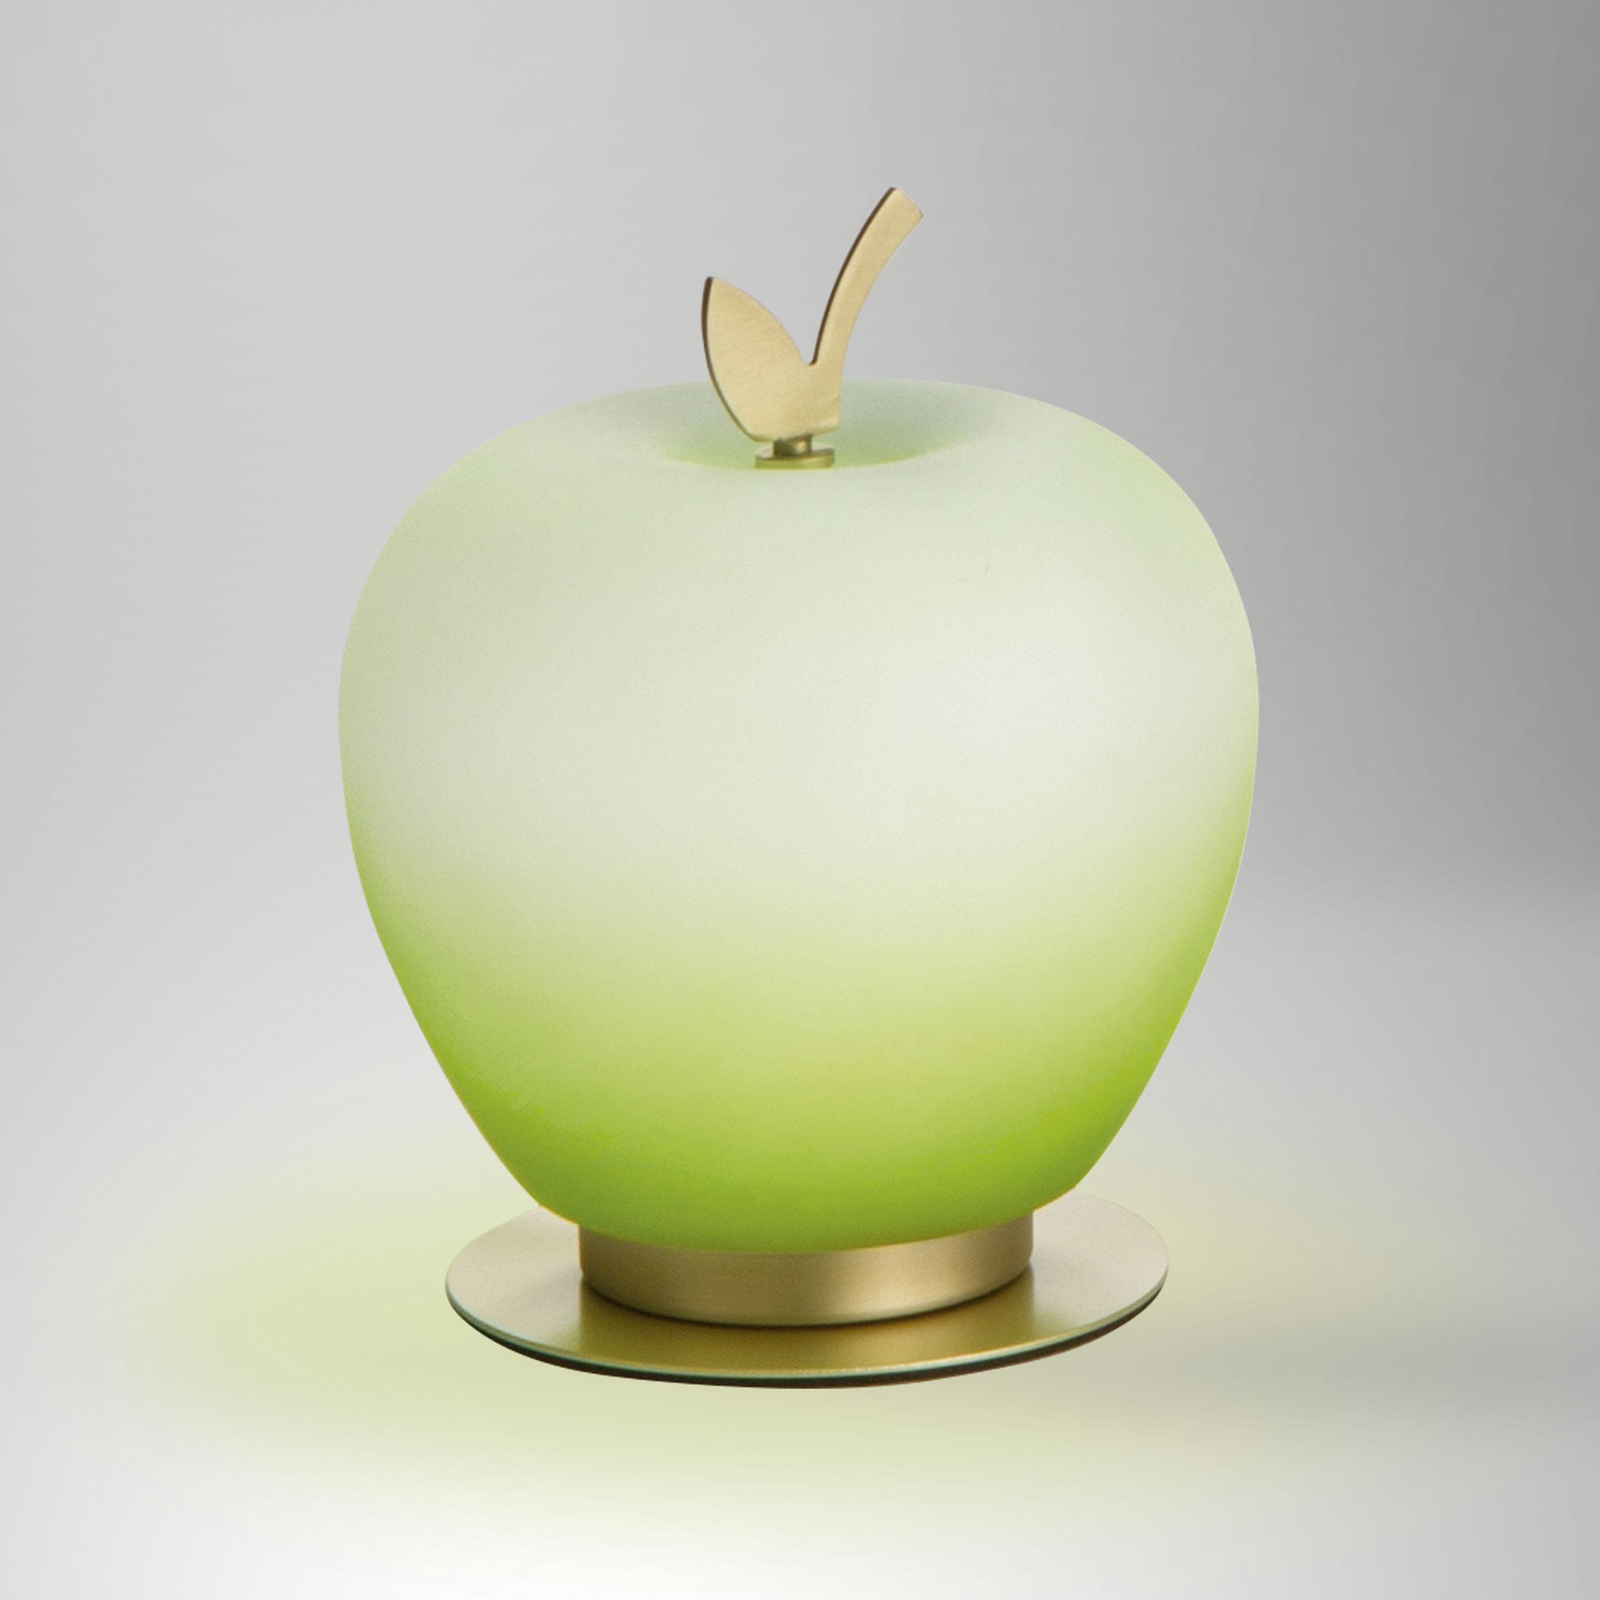 Wendy LED-bordslampa, grön/mässing, äppelform, glas, dimbar